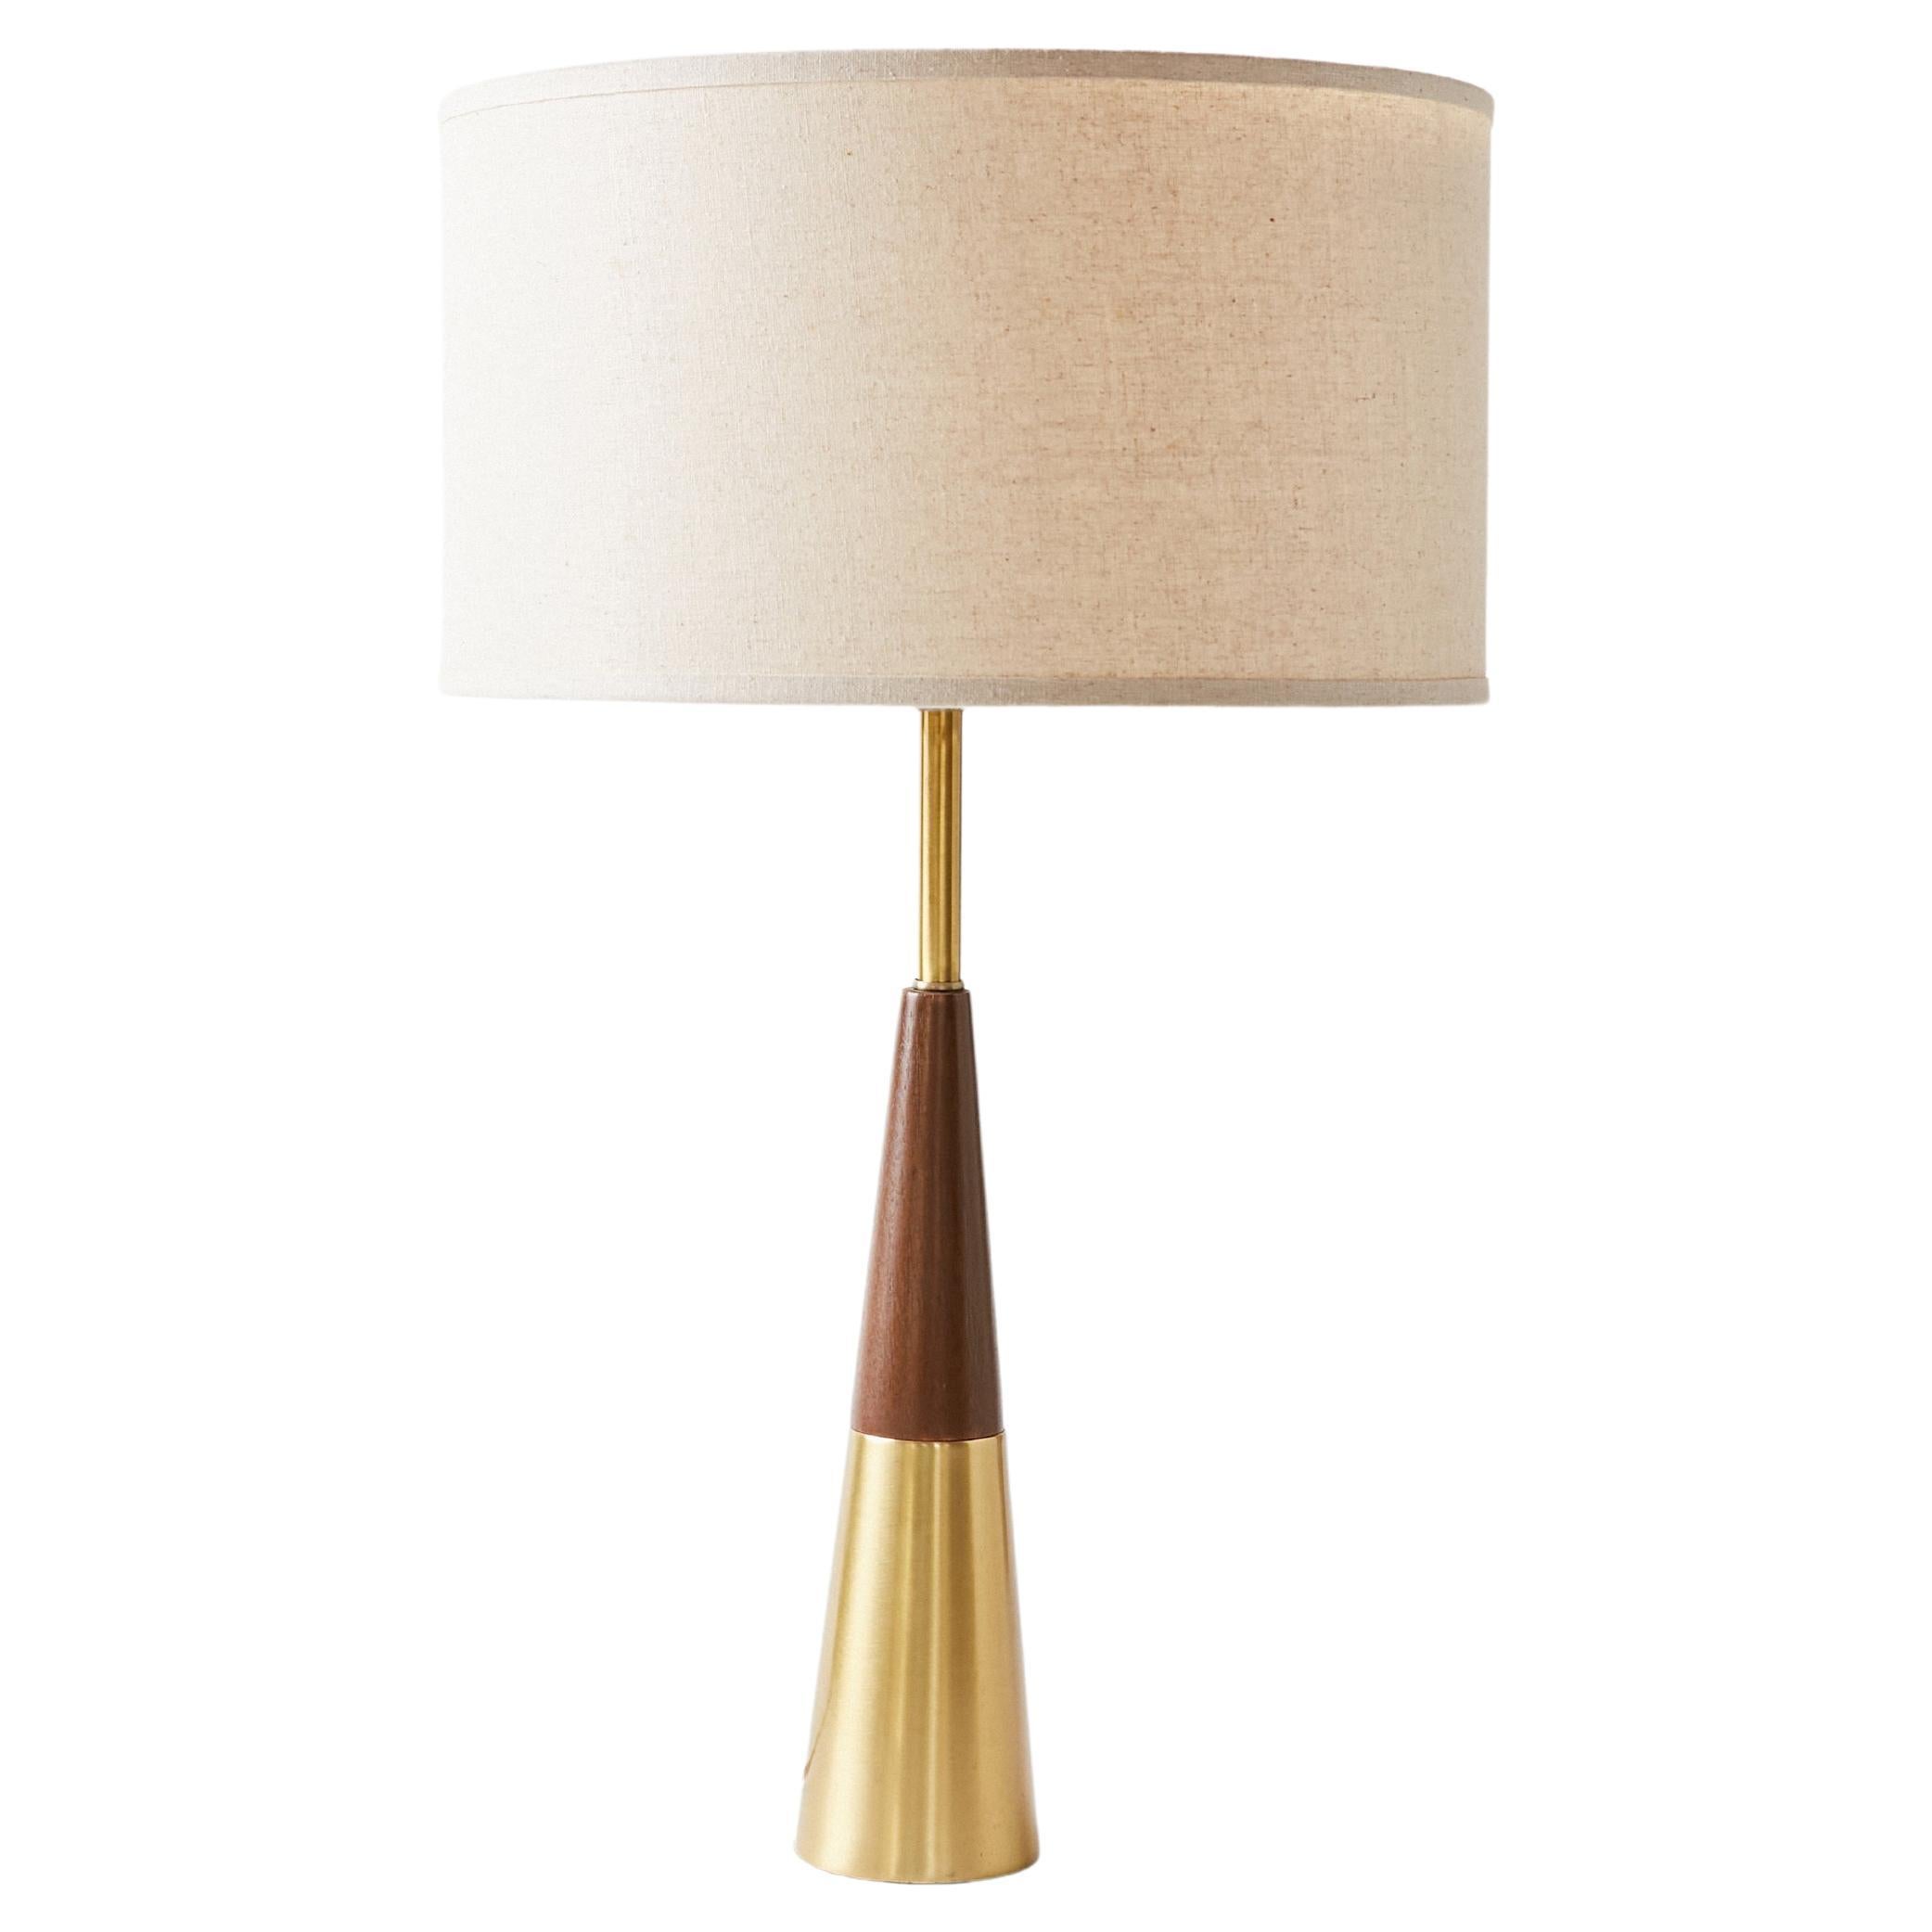 Brass & Solid Walnut Lamp by Tony Paul for Westwood Swedish